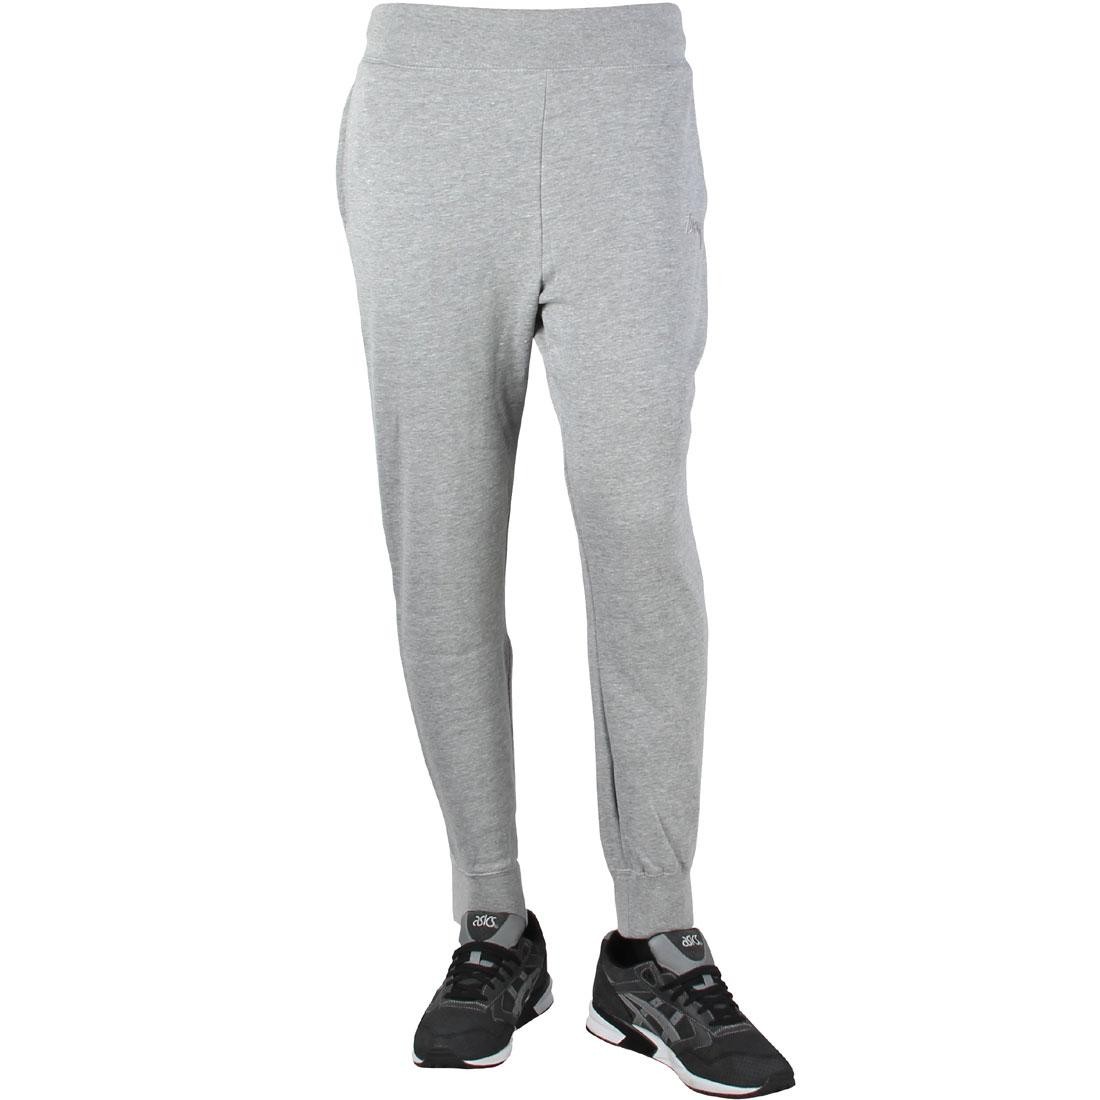 Stussy Men Tonal Stock Fleece pants pattern (gray / heather)